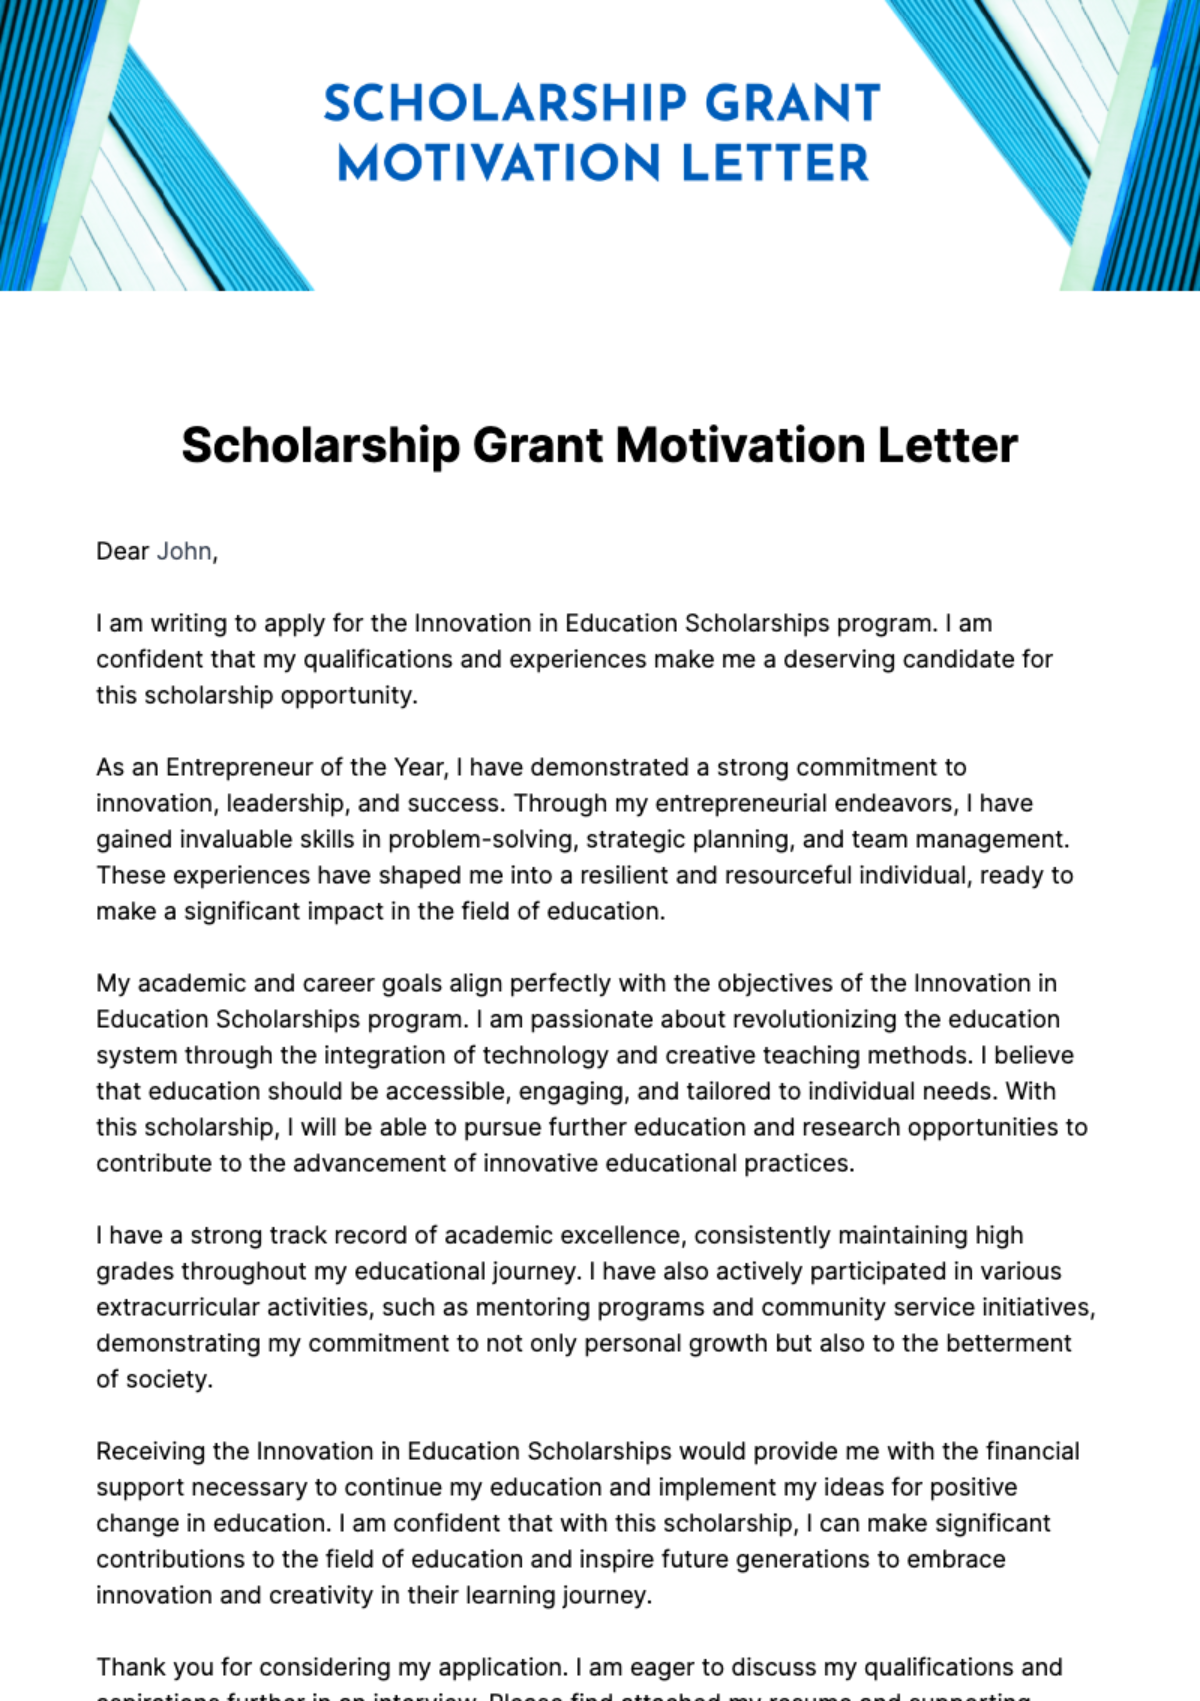 Free Scholarship Grant Motivation Letter Template